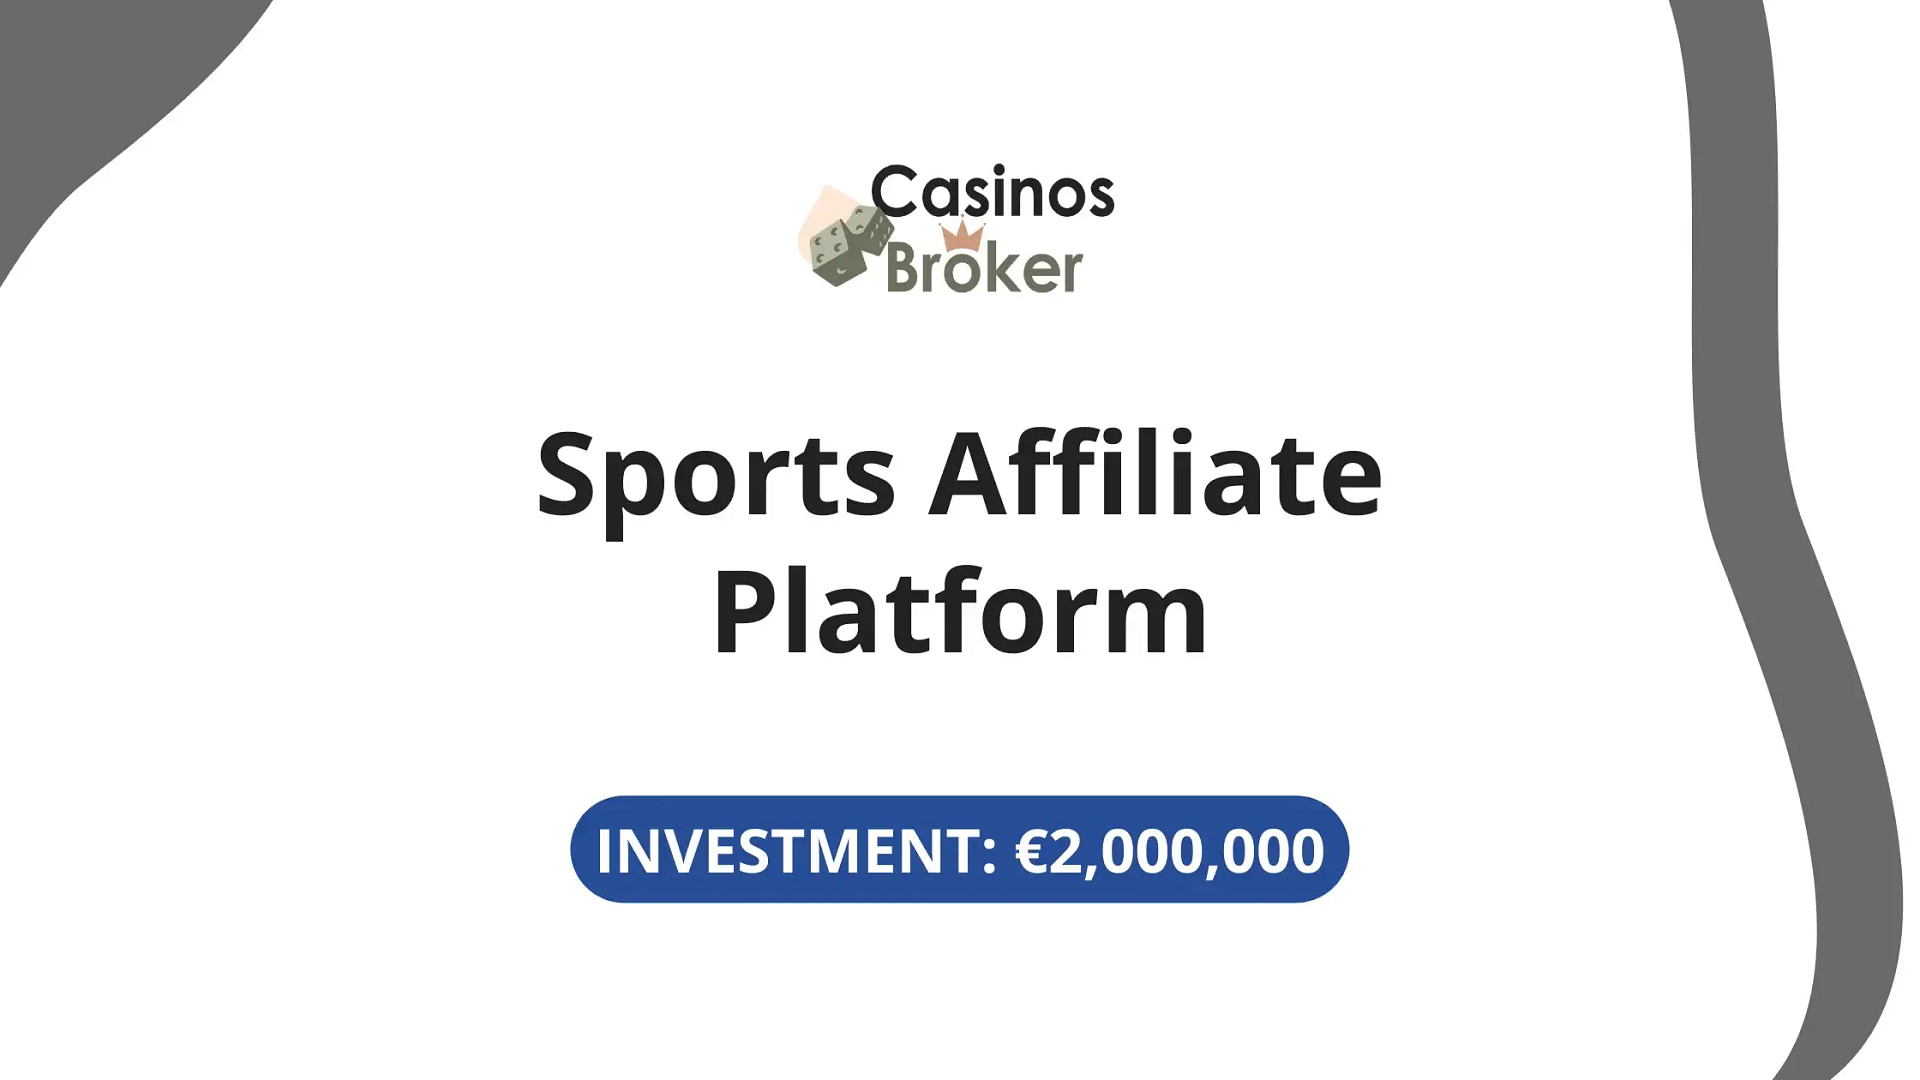 Sports Affiliate Platform - Investment €2,000,000